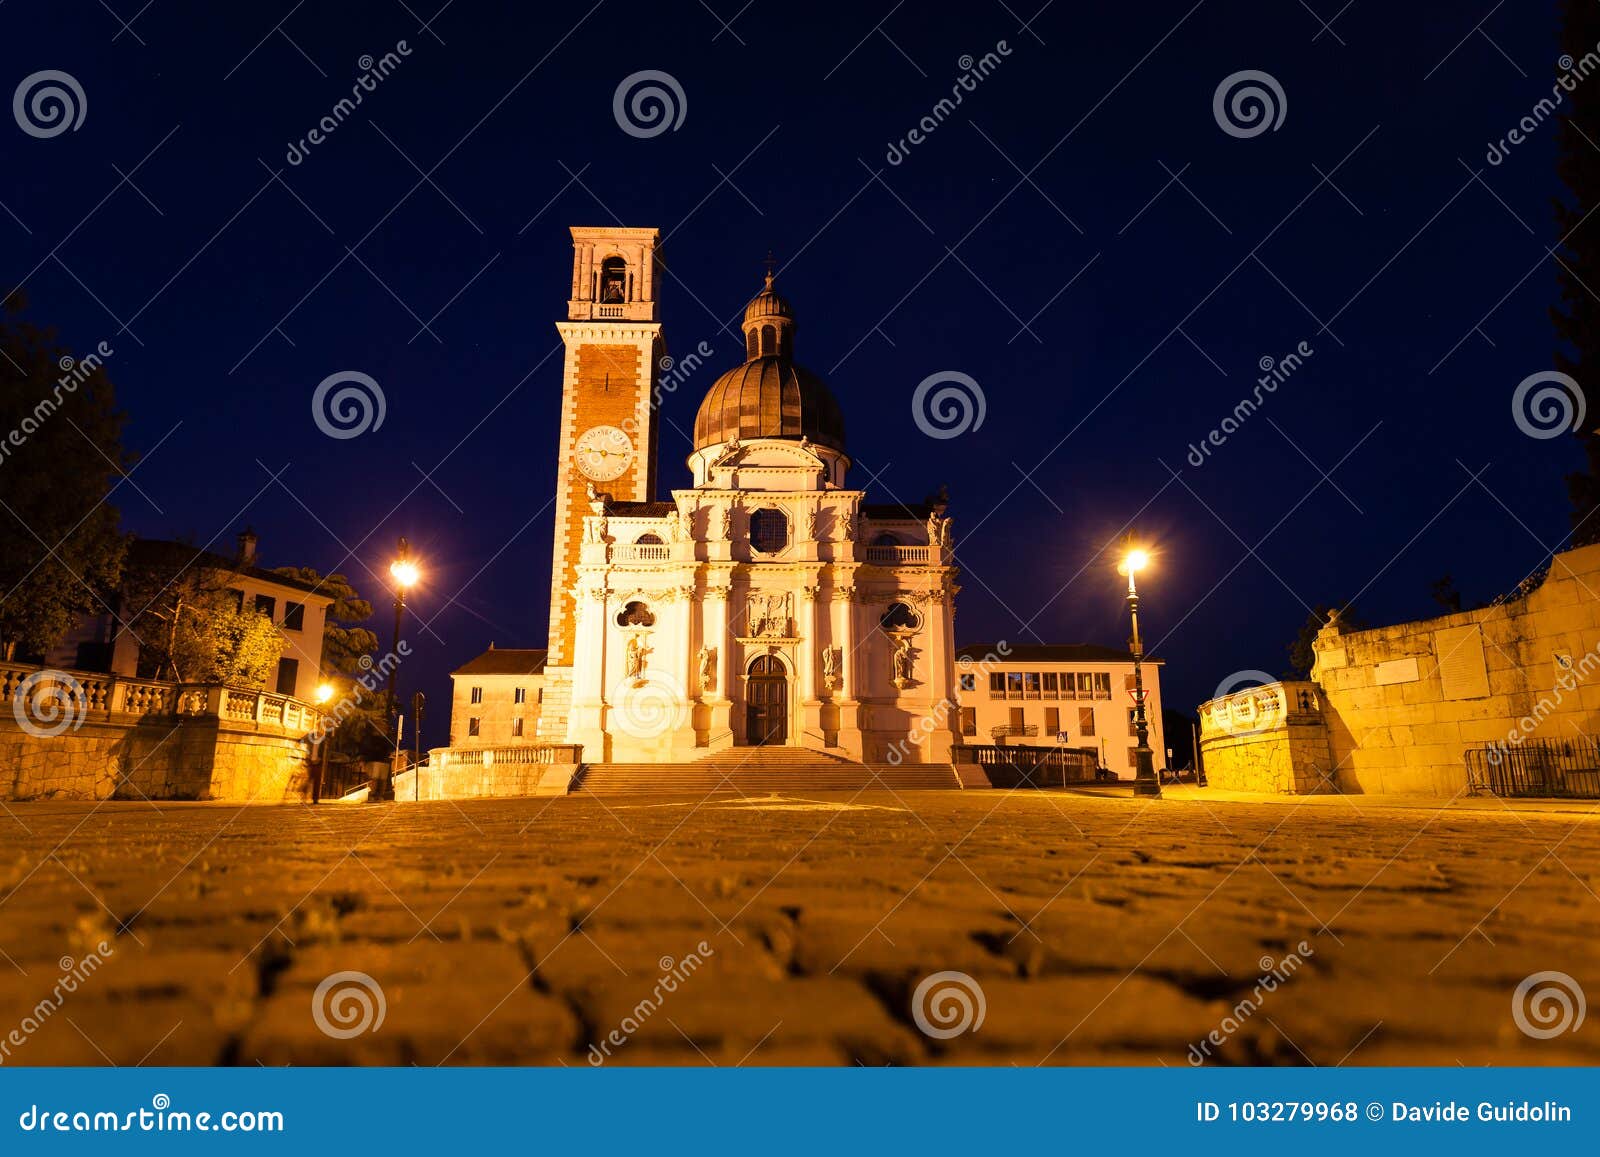 basilica sanctuary of saint mary of monte berico,vicenza